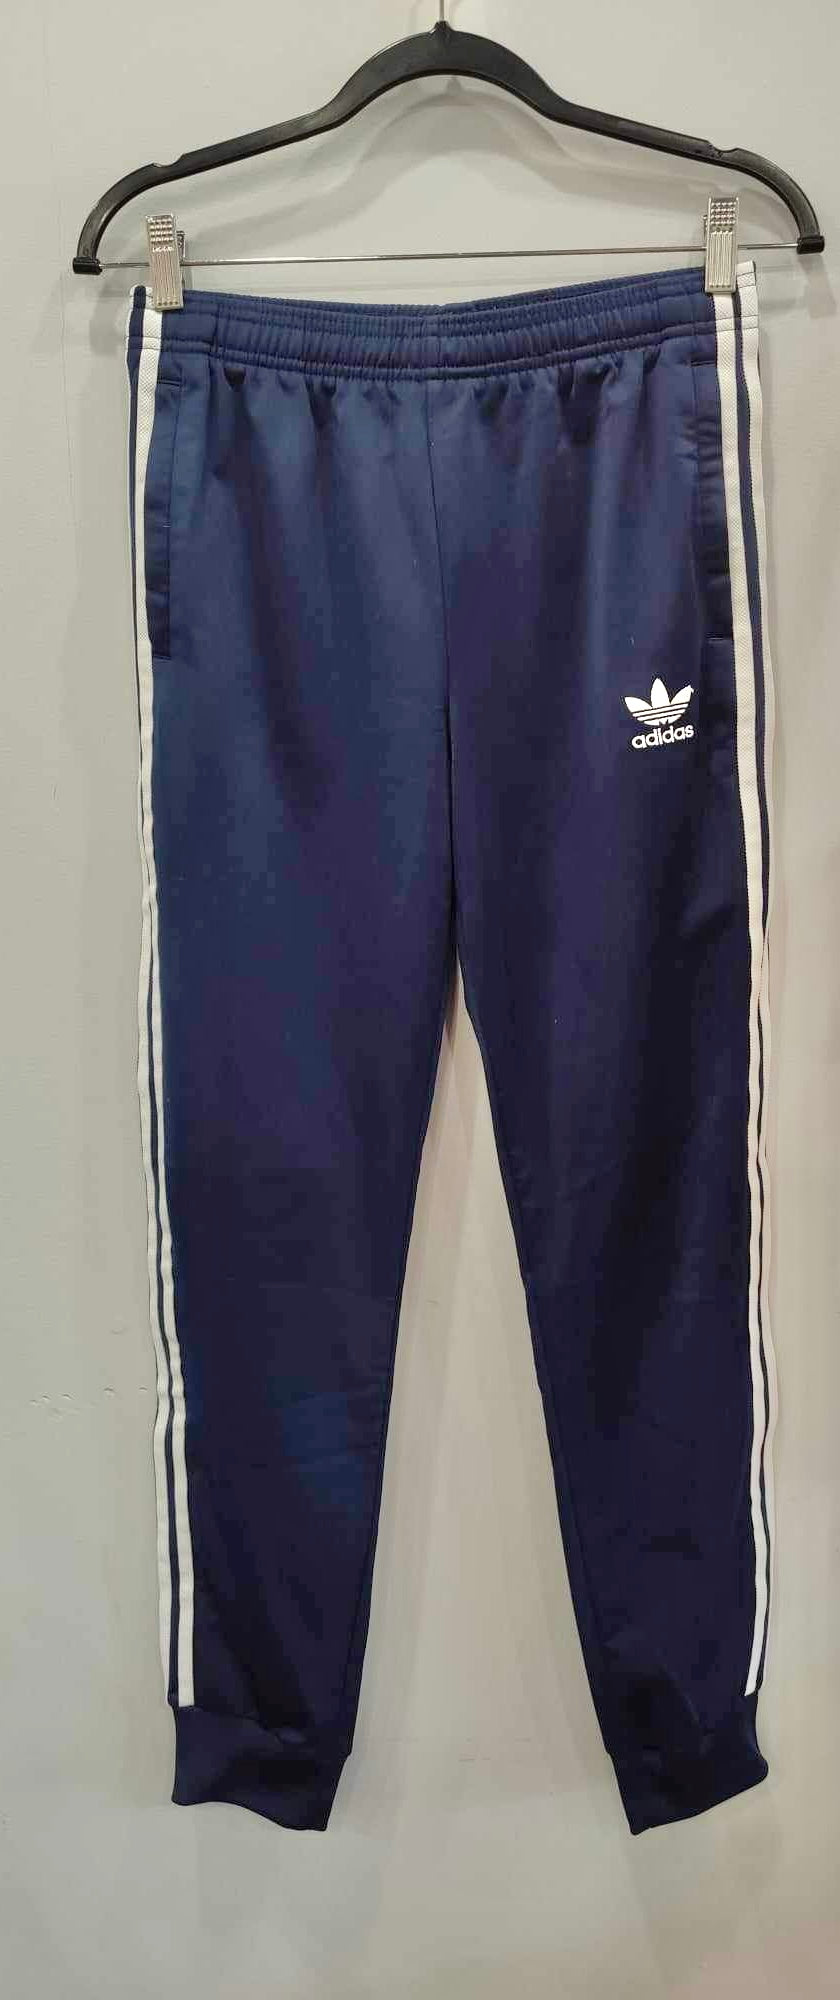 Adidas Blue Pants Size 13-14Y